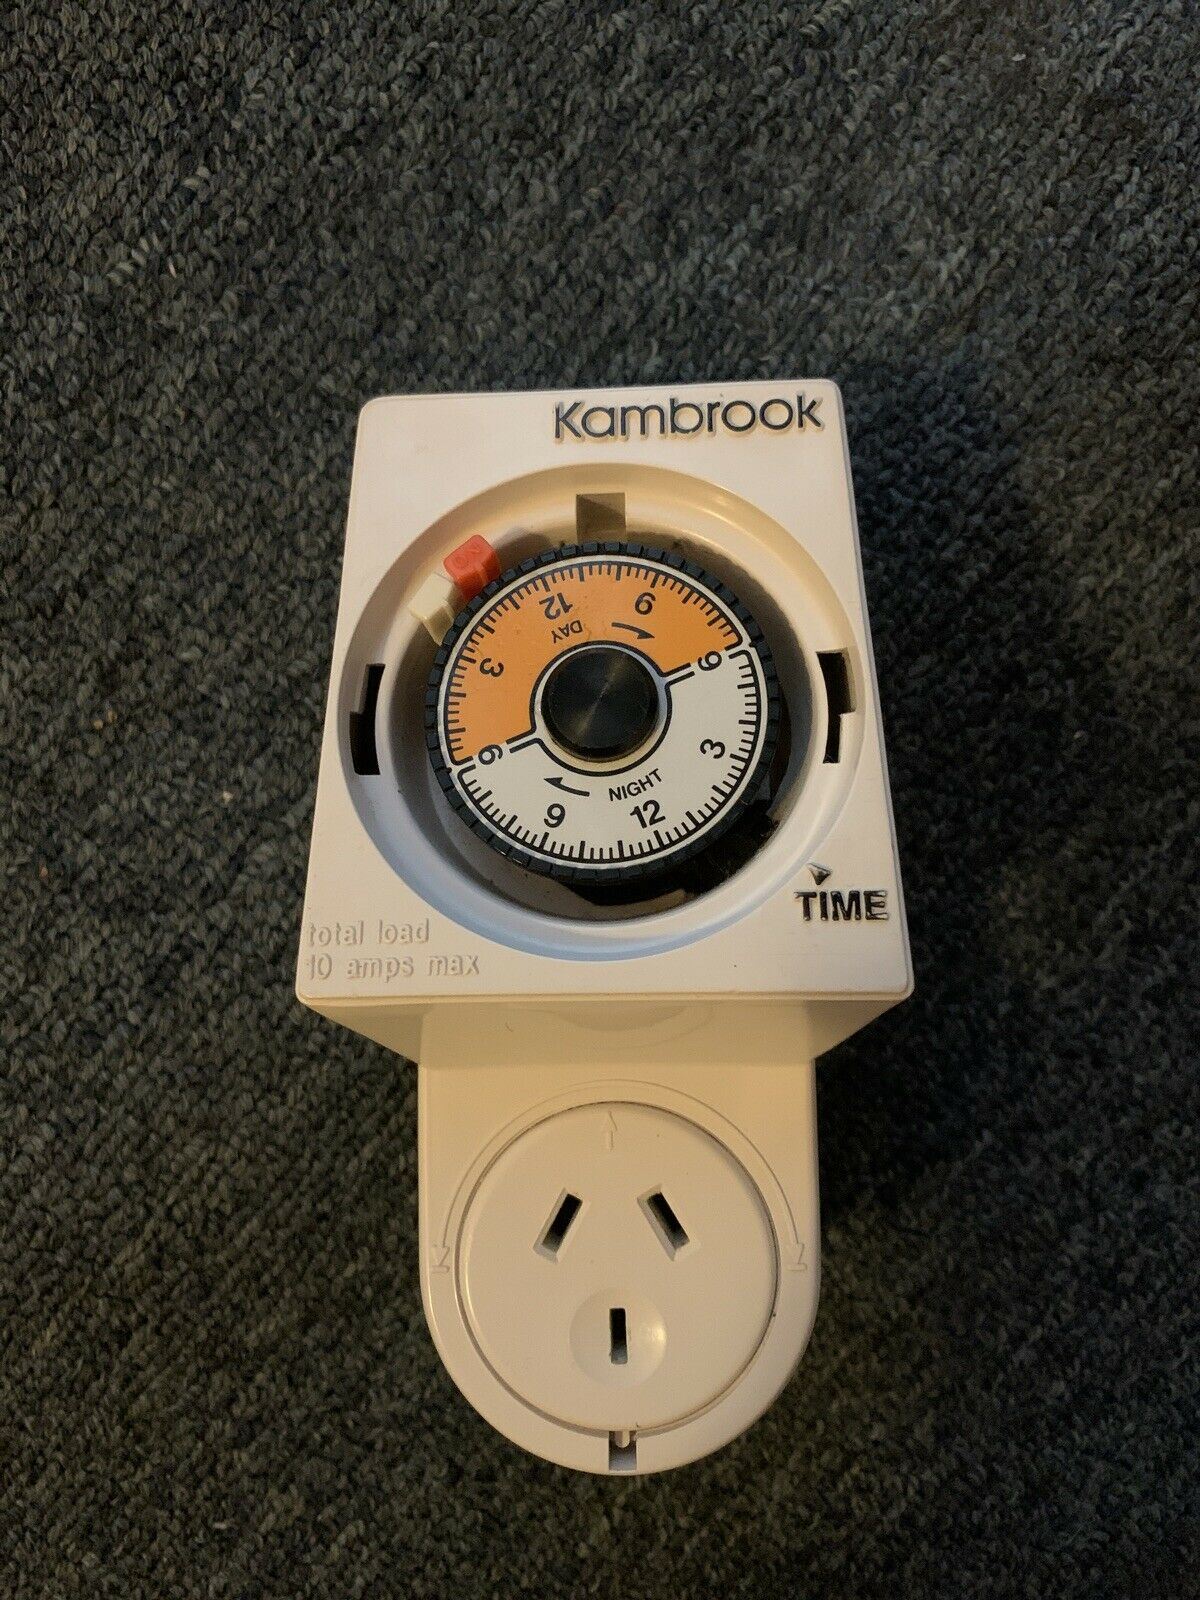 Kambrook KD 44 timer retro 1980s